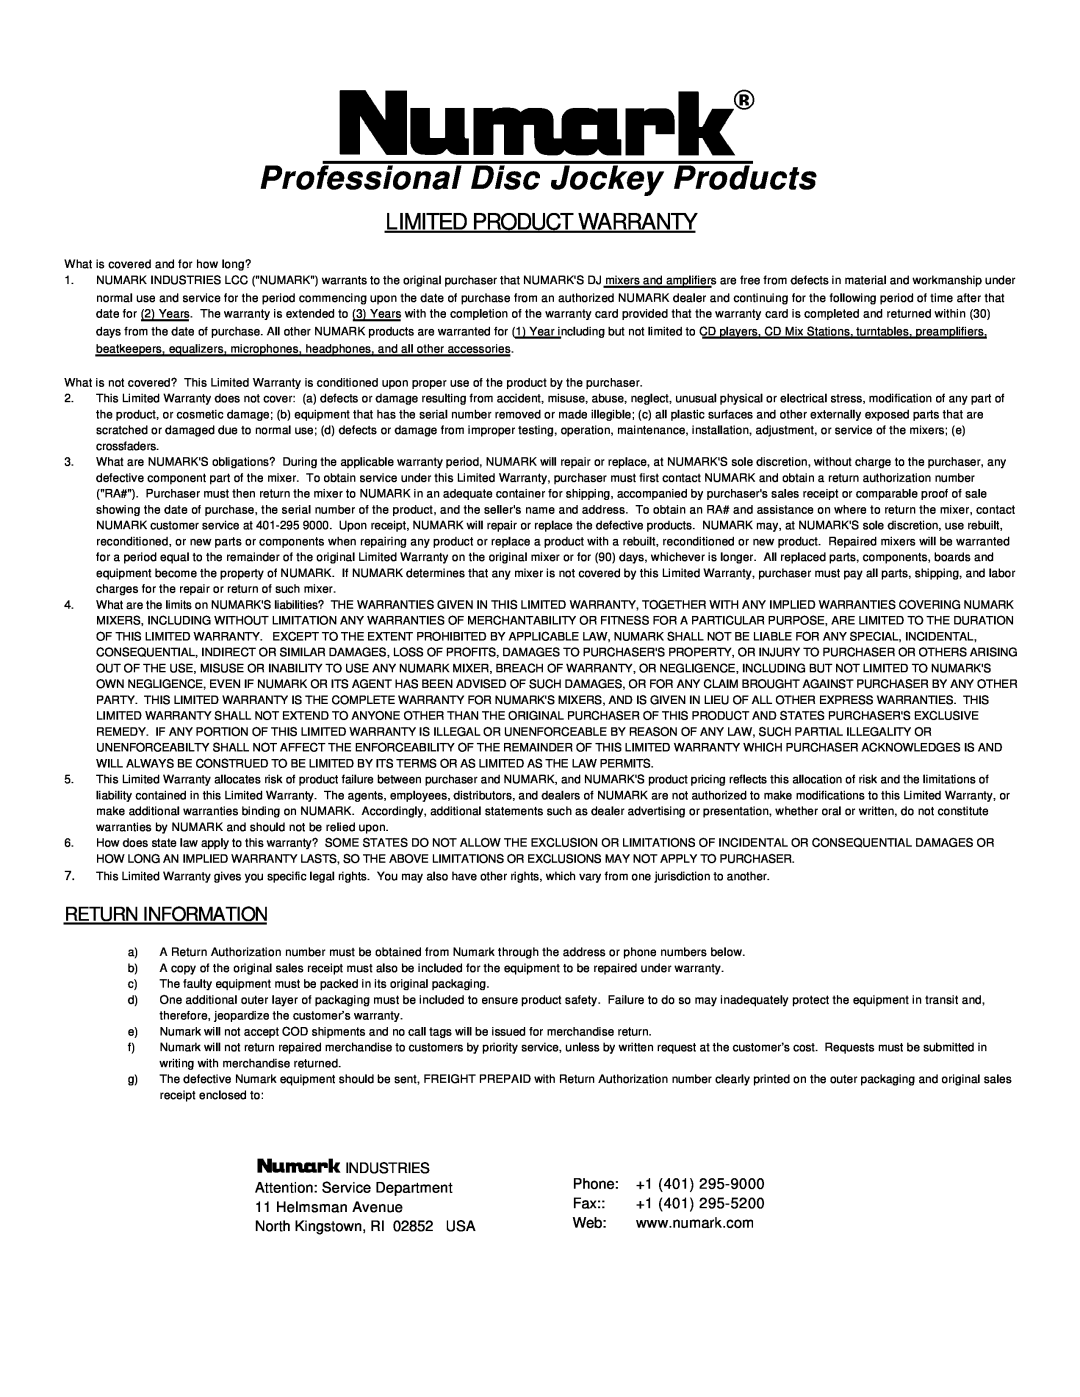 Numark Industries TT-1520 user manual Professional Disc Jockey Products, Limited Product Warranty, Return Information 